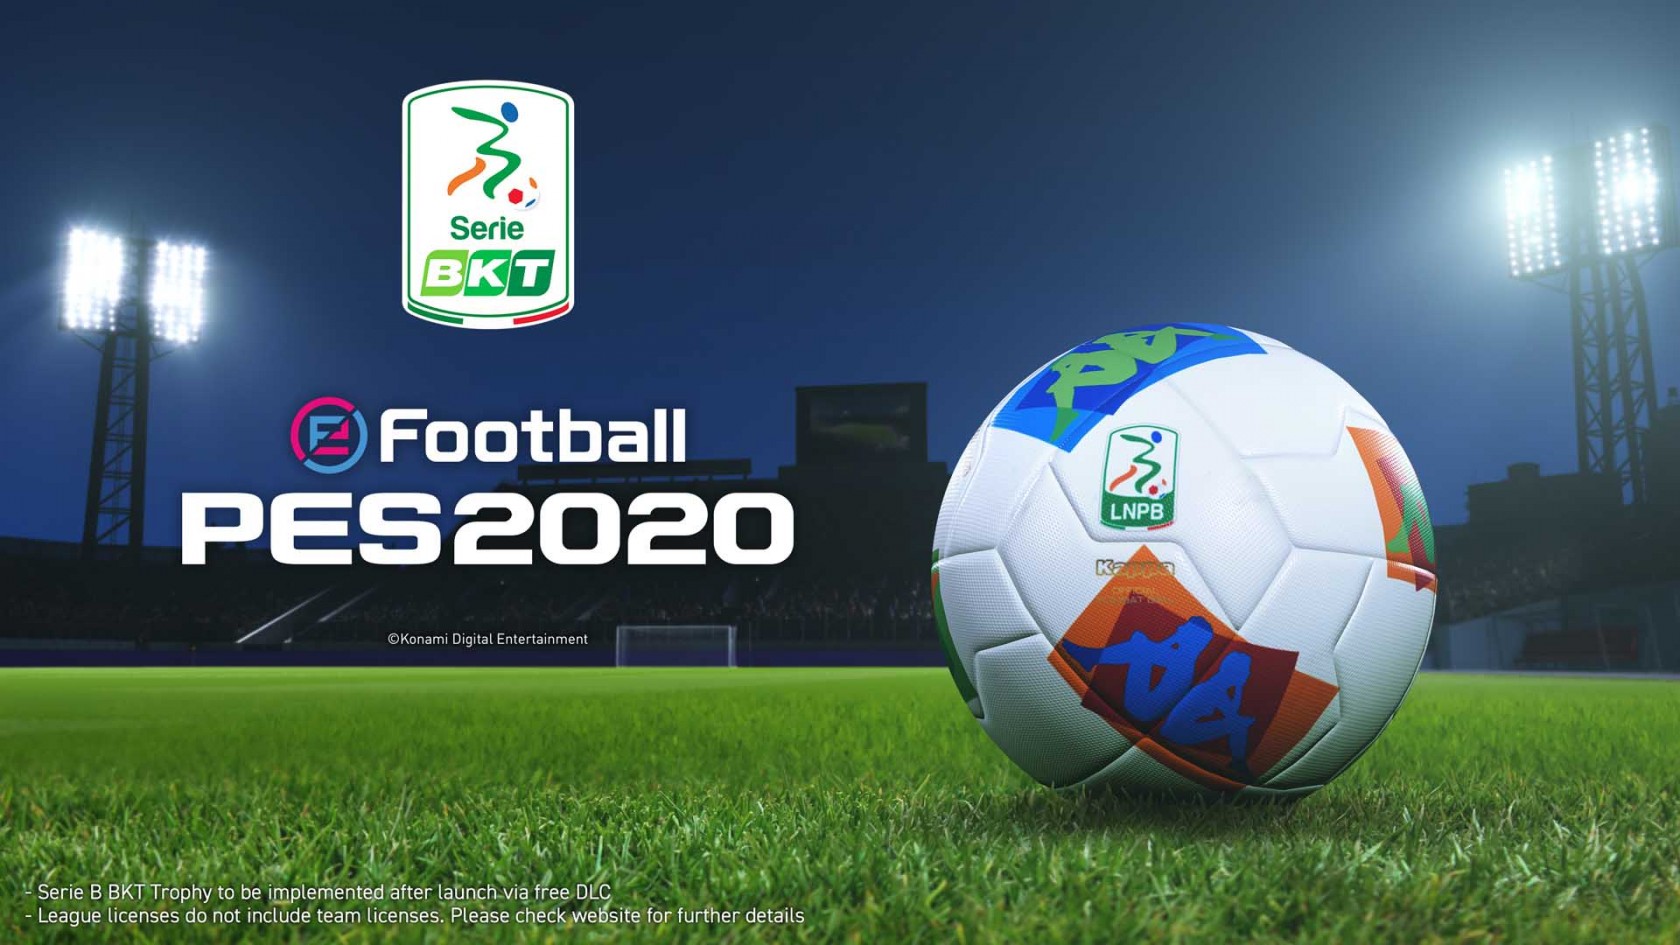 https://www.gamesource.it/wp-content/uploads/2019/10/eFootball-PES2020_SerieB.jpg